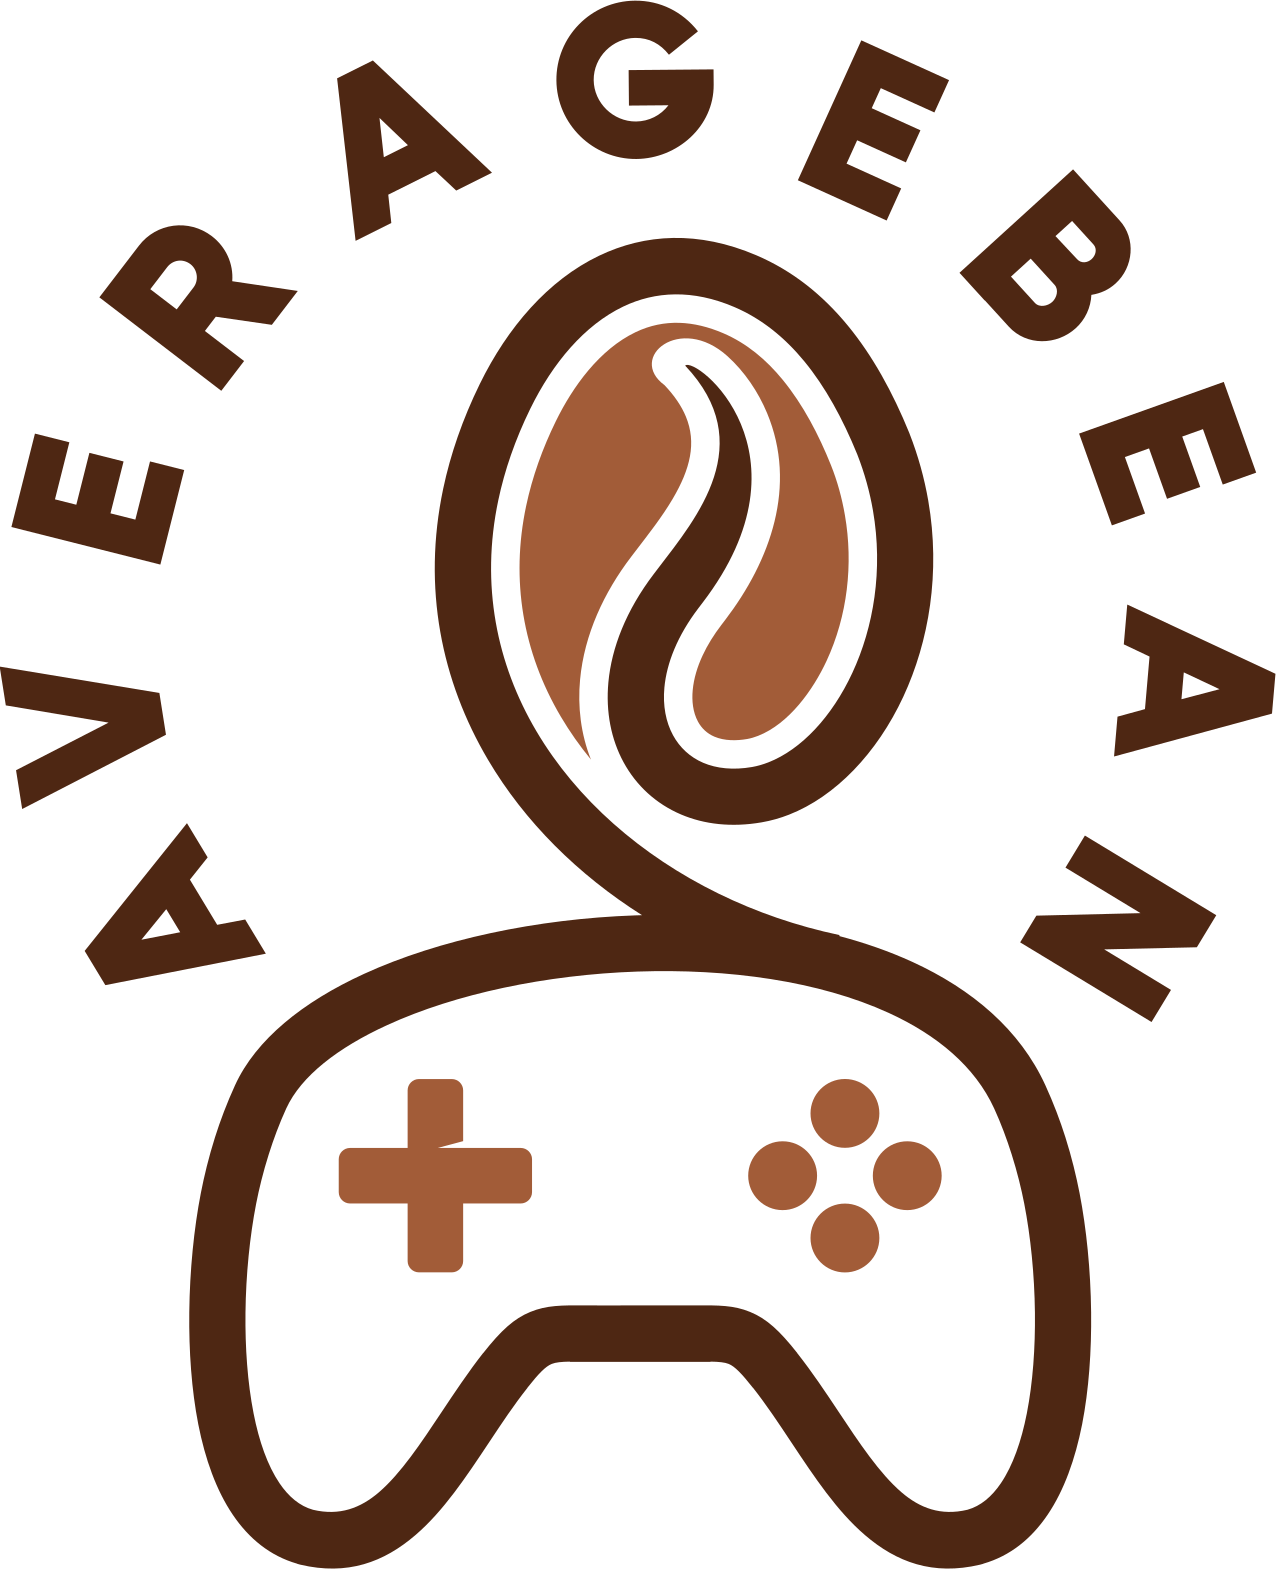 AverageBean's logo